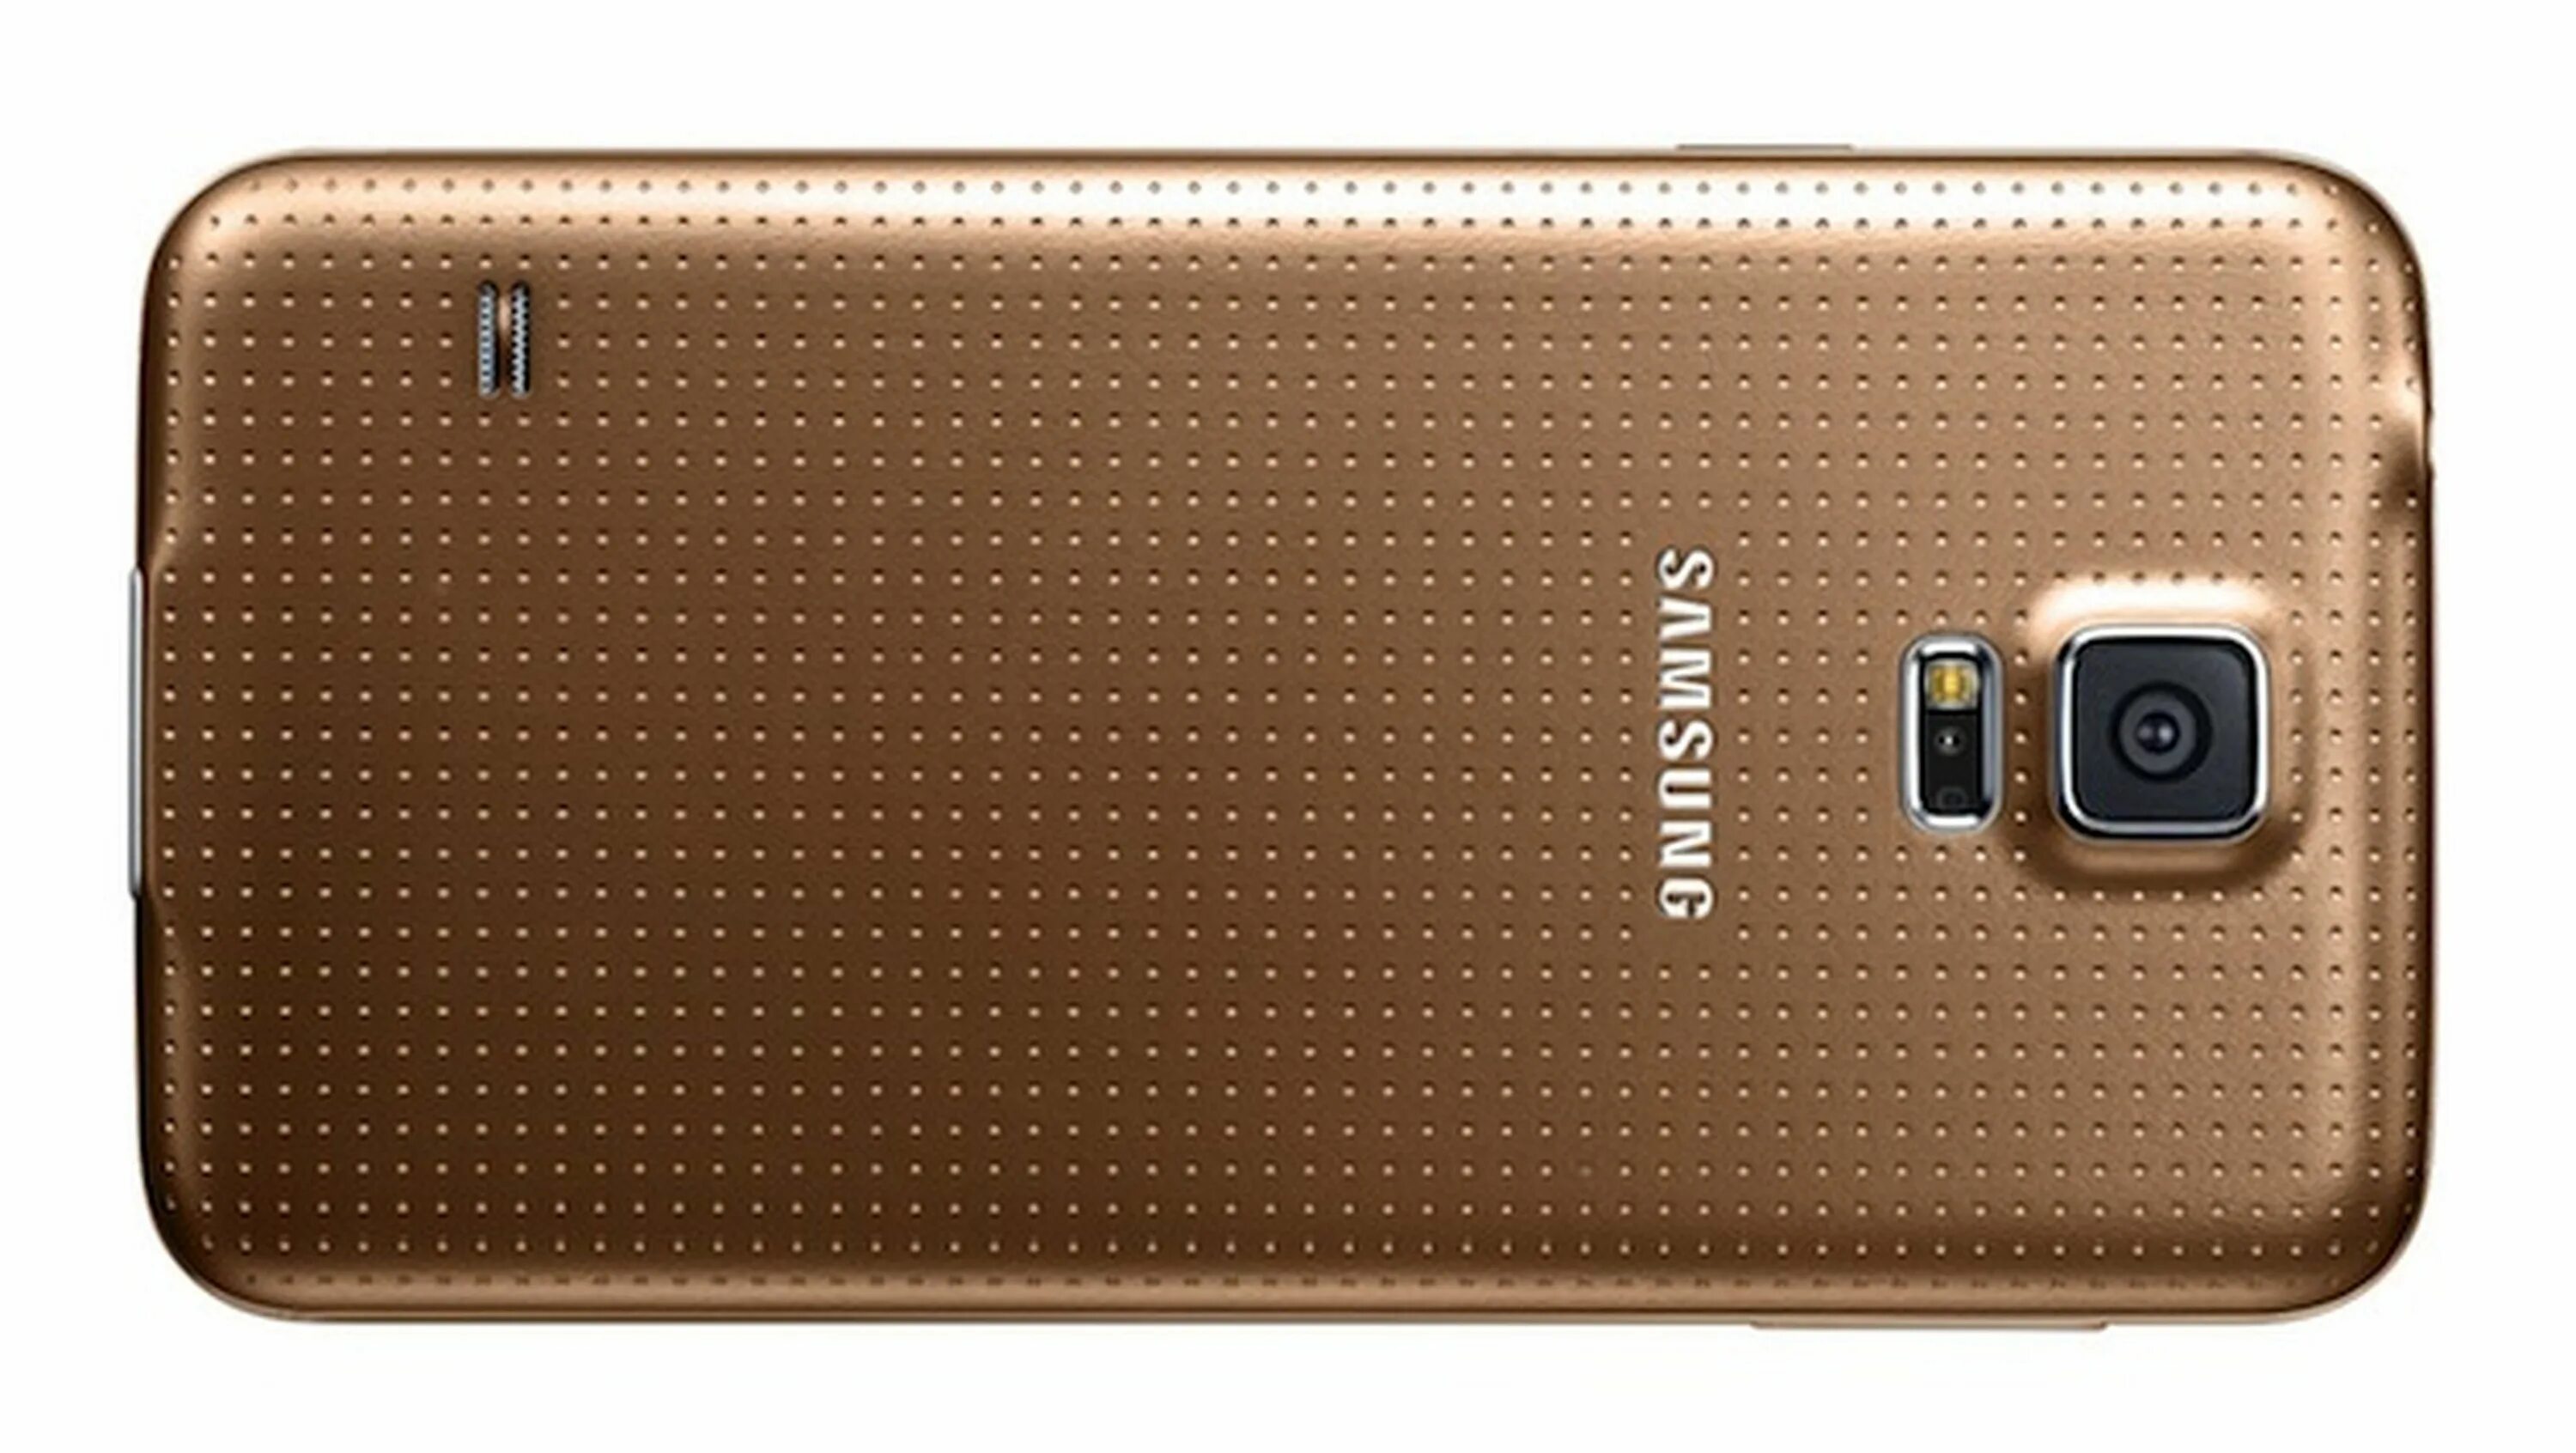 Samsung Galaxy s5 Gold. Самсунг s5 золотой. Samsung Galaxy s5 SM-g900f 16gb. Самсунг галакси s5 LTE золотистый. Samsung galaxy s5 sm